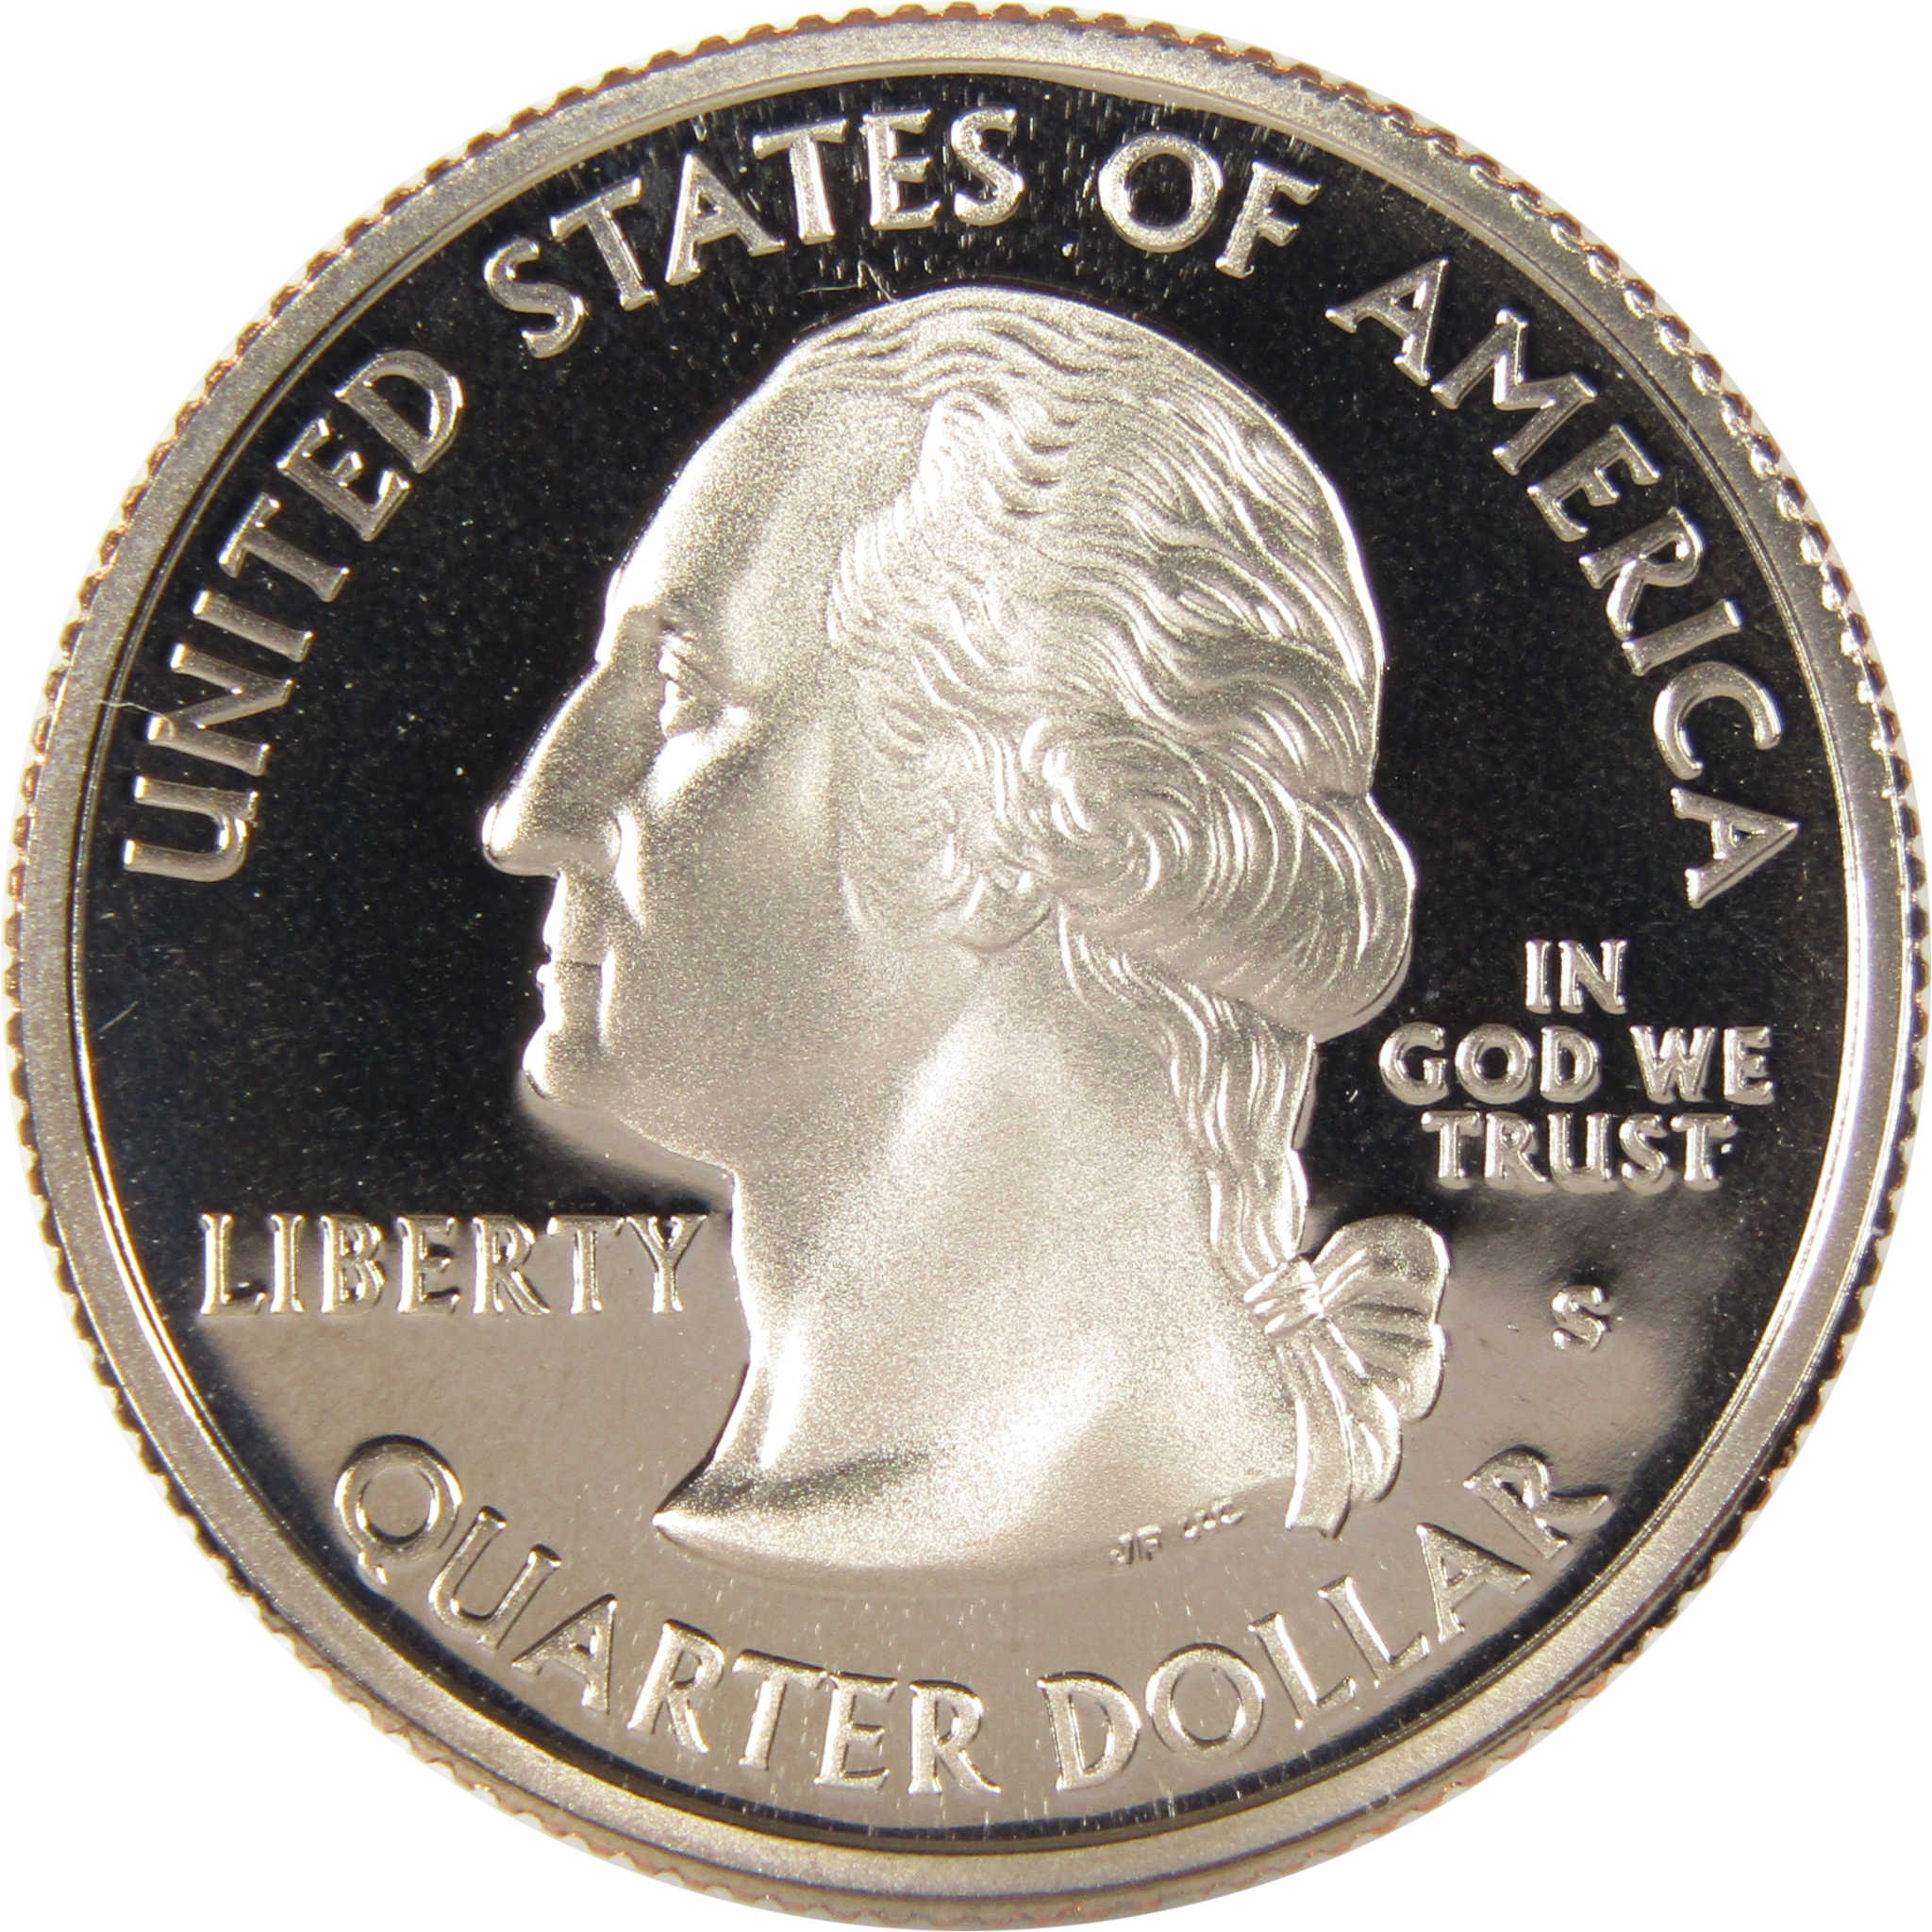 2003 S Arkansas State Quarter Clad 25c Proof Coin